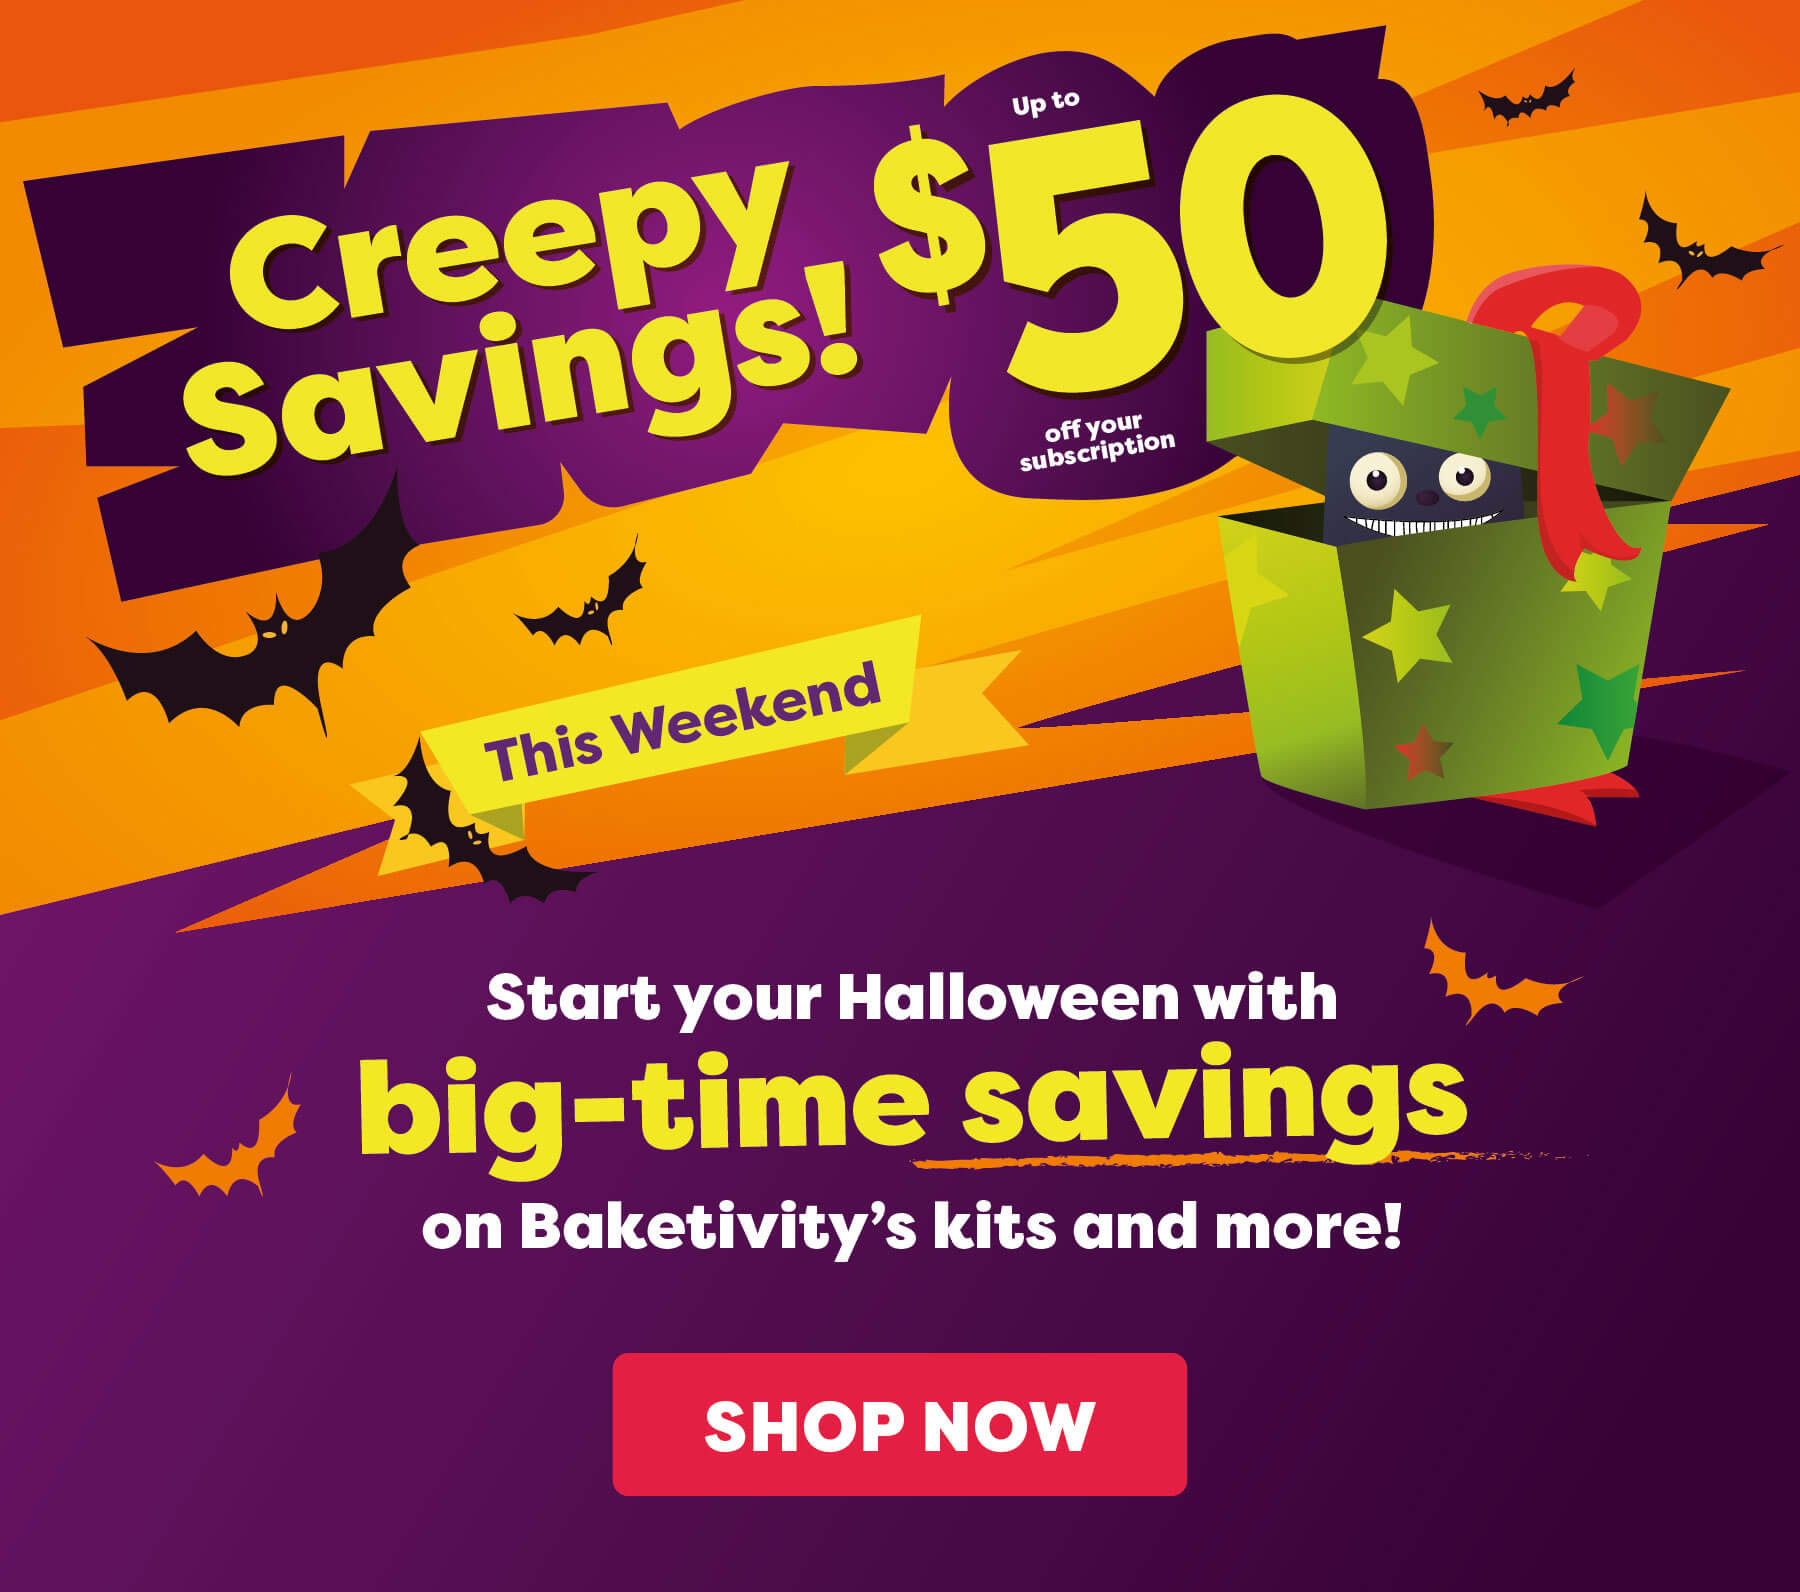 Baketivity Halloween Sale: Get Up To $50 Off! - Hello Subscription